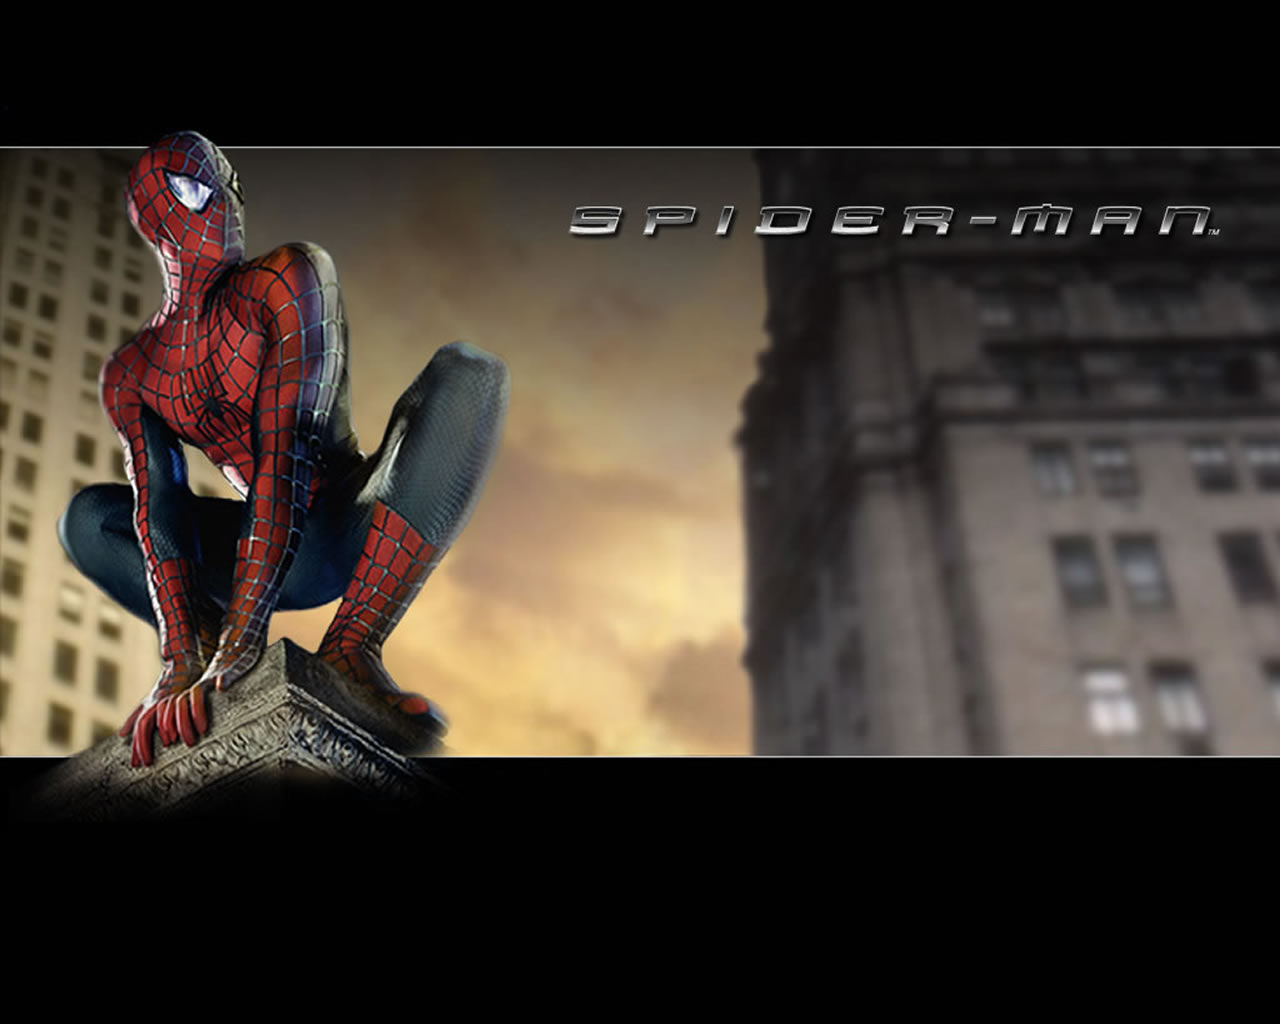 download wallpaper: Spiderman wallpaper